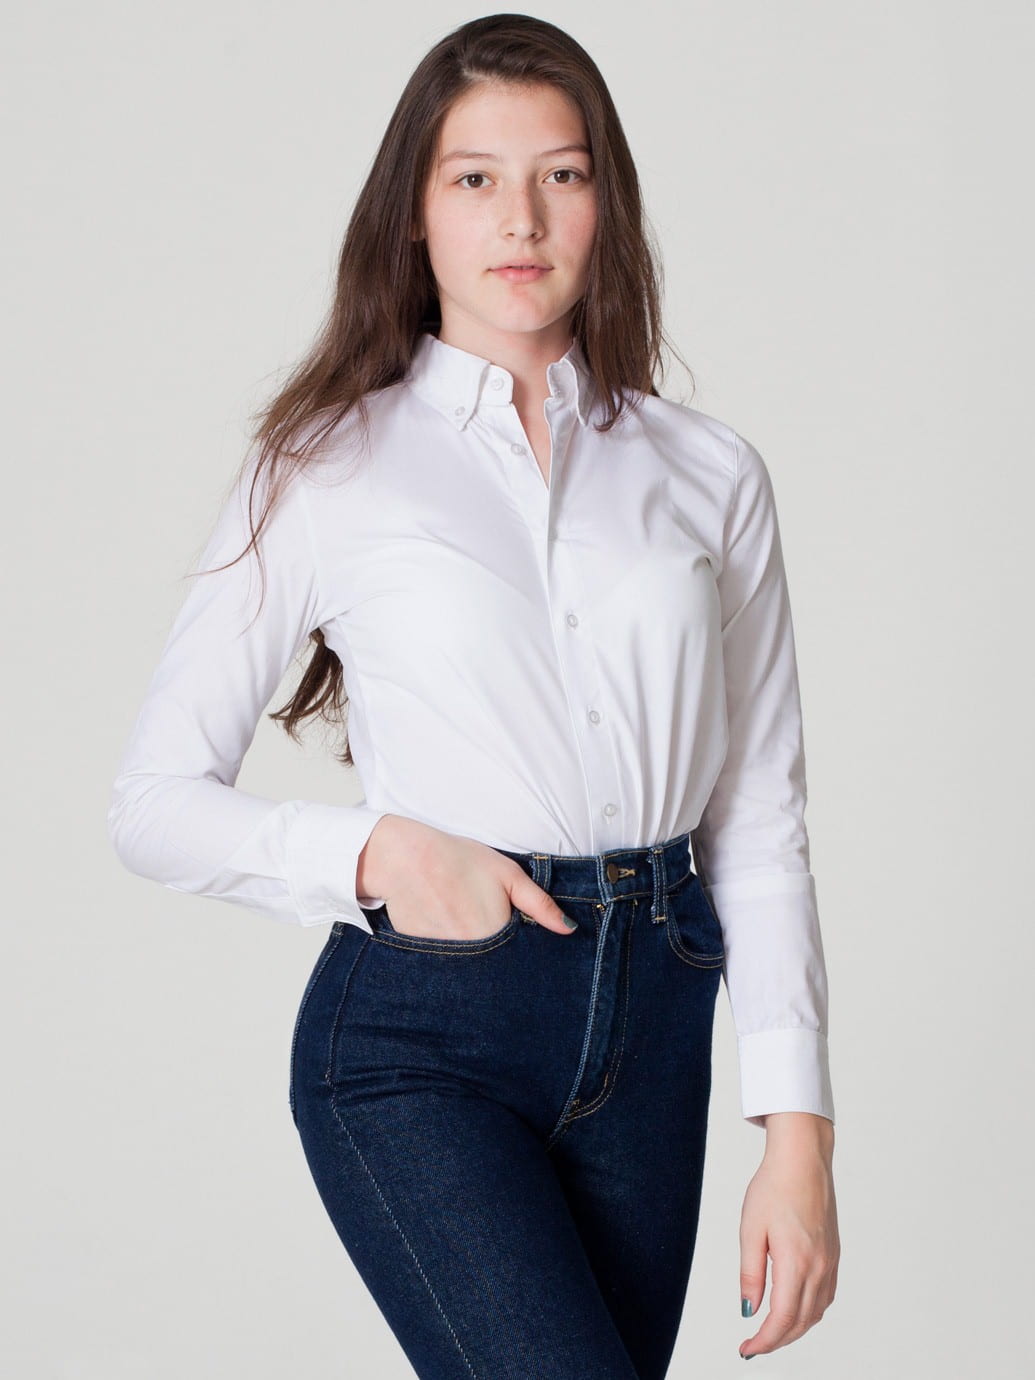 Style A Basic White Shirt